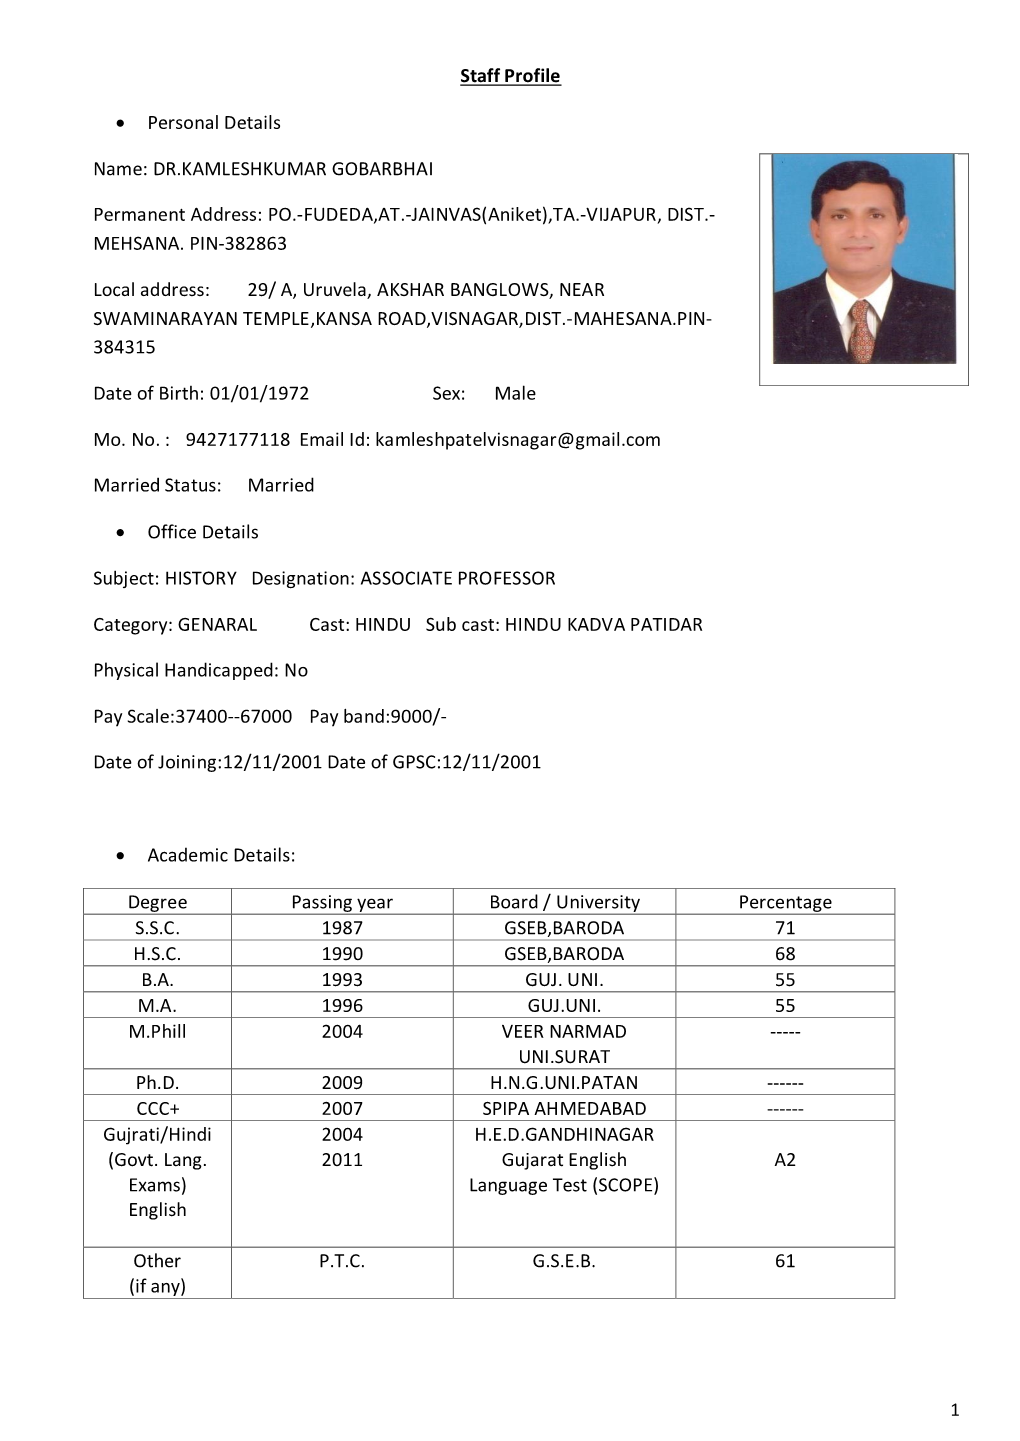 Staff Profile • Personal Details Name: DR.KAMLESHKUMAR GOBARBHAI Permanent Address: PO.-FUDEDA,AT.-JAINVAS(Aniket),TA.-VIJAPU